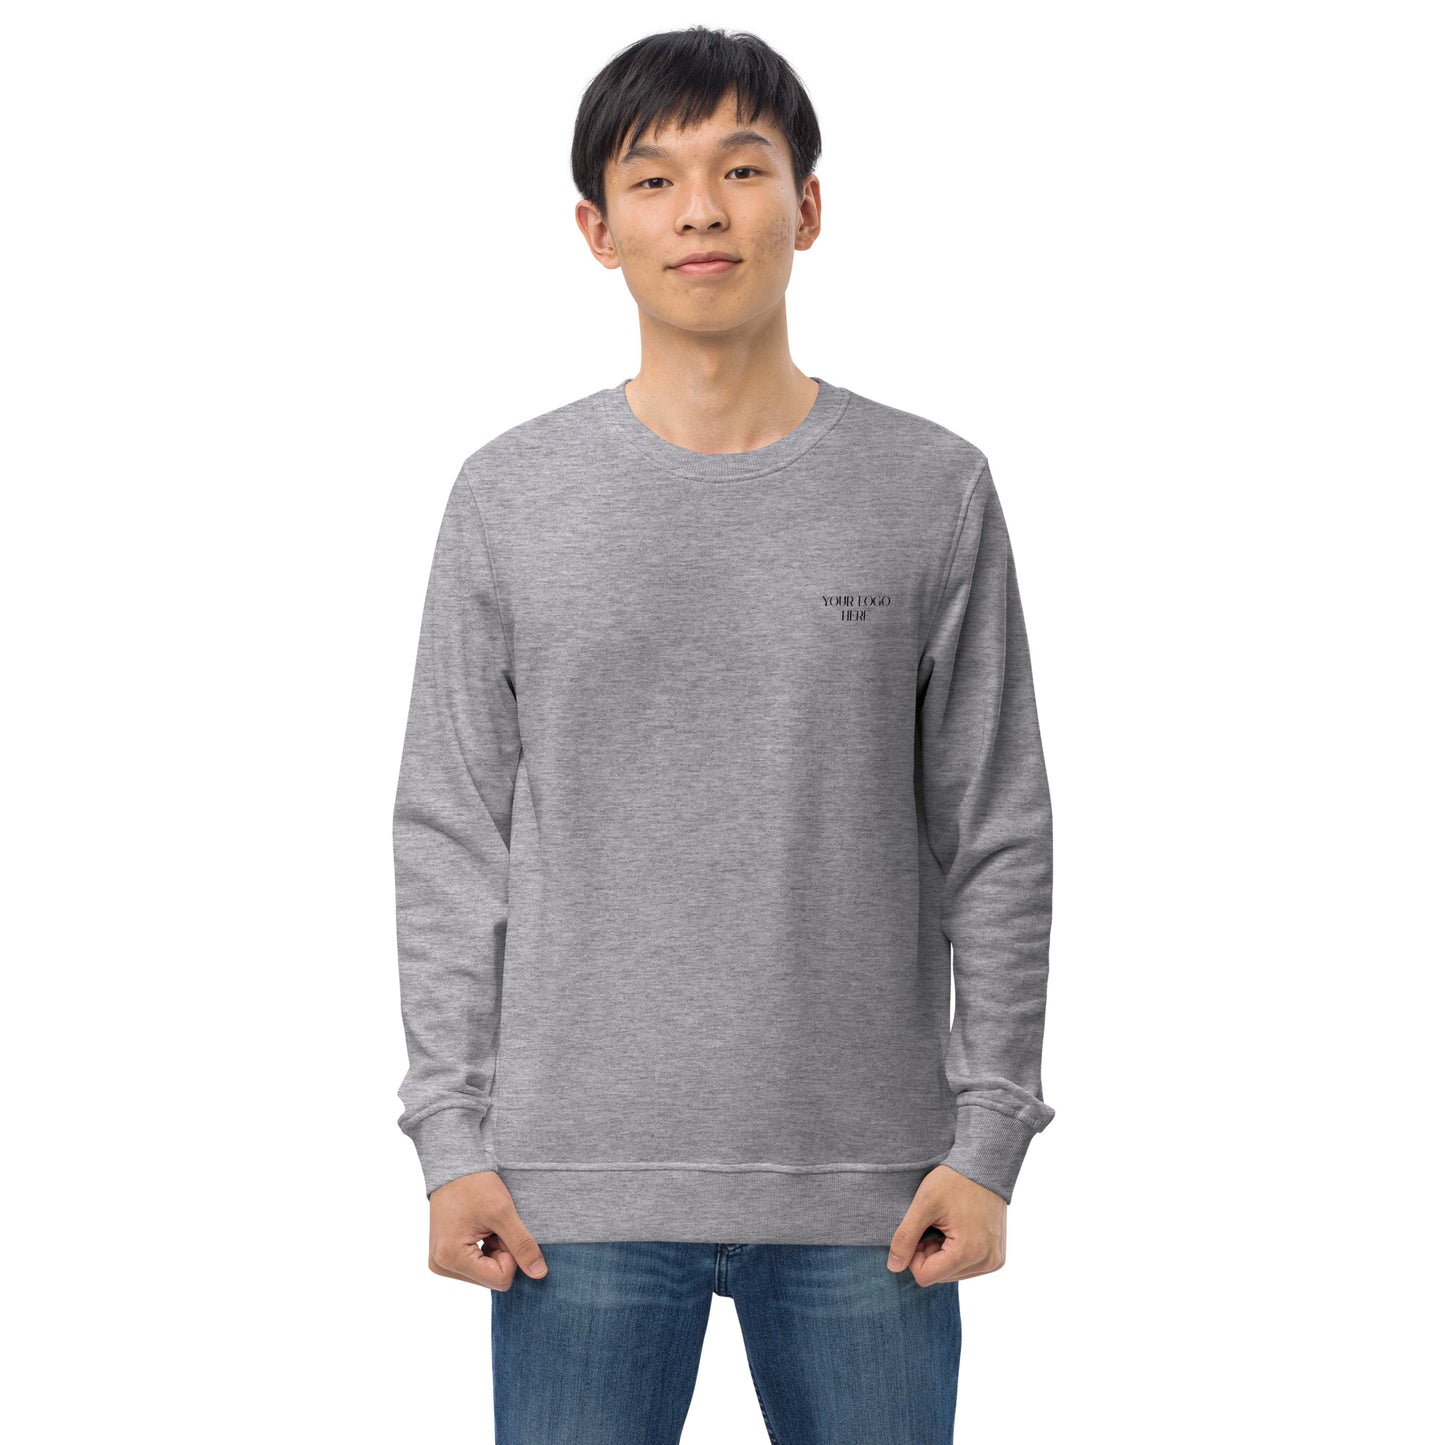 Unisex organic sweatshirt